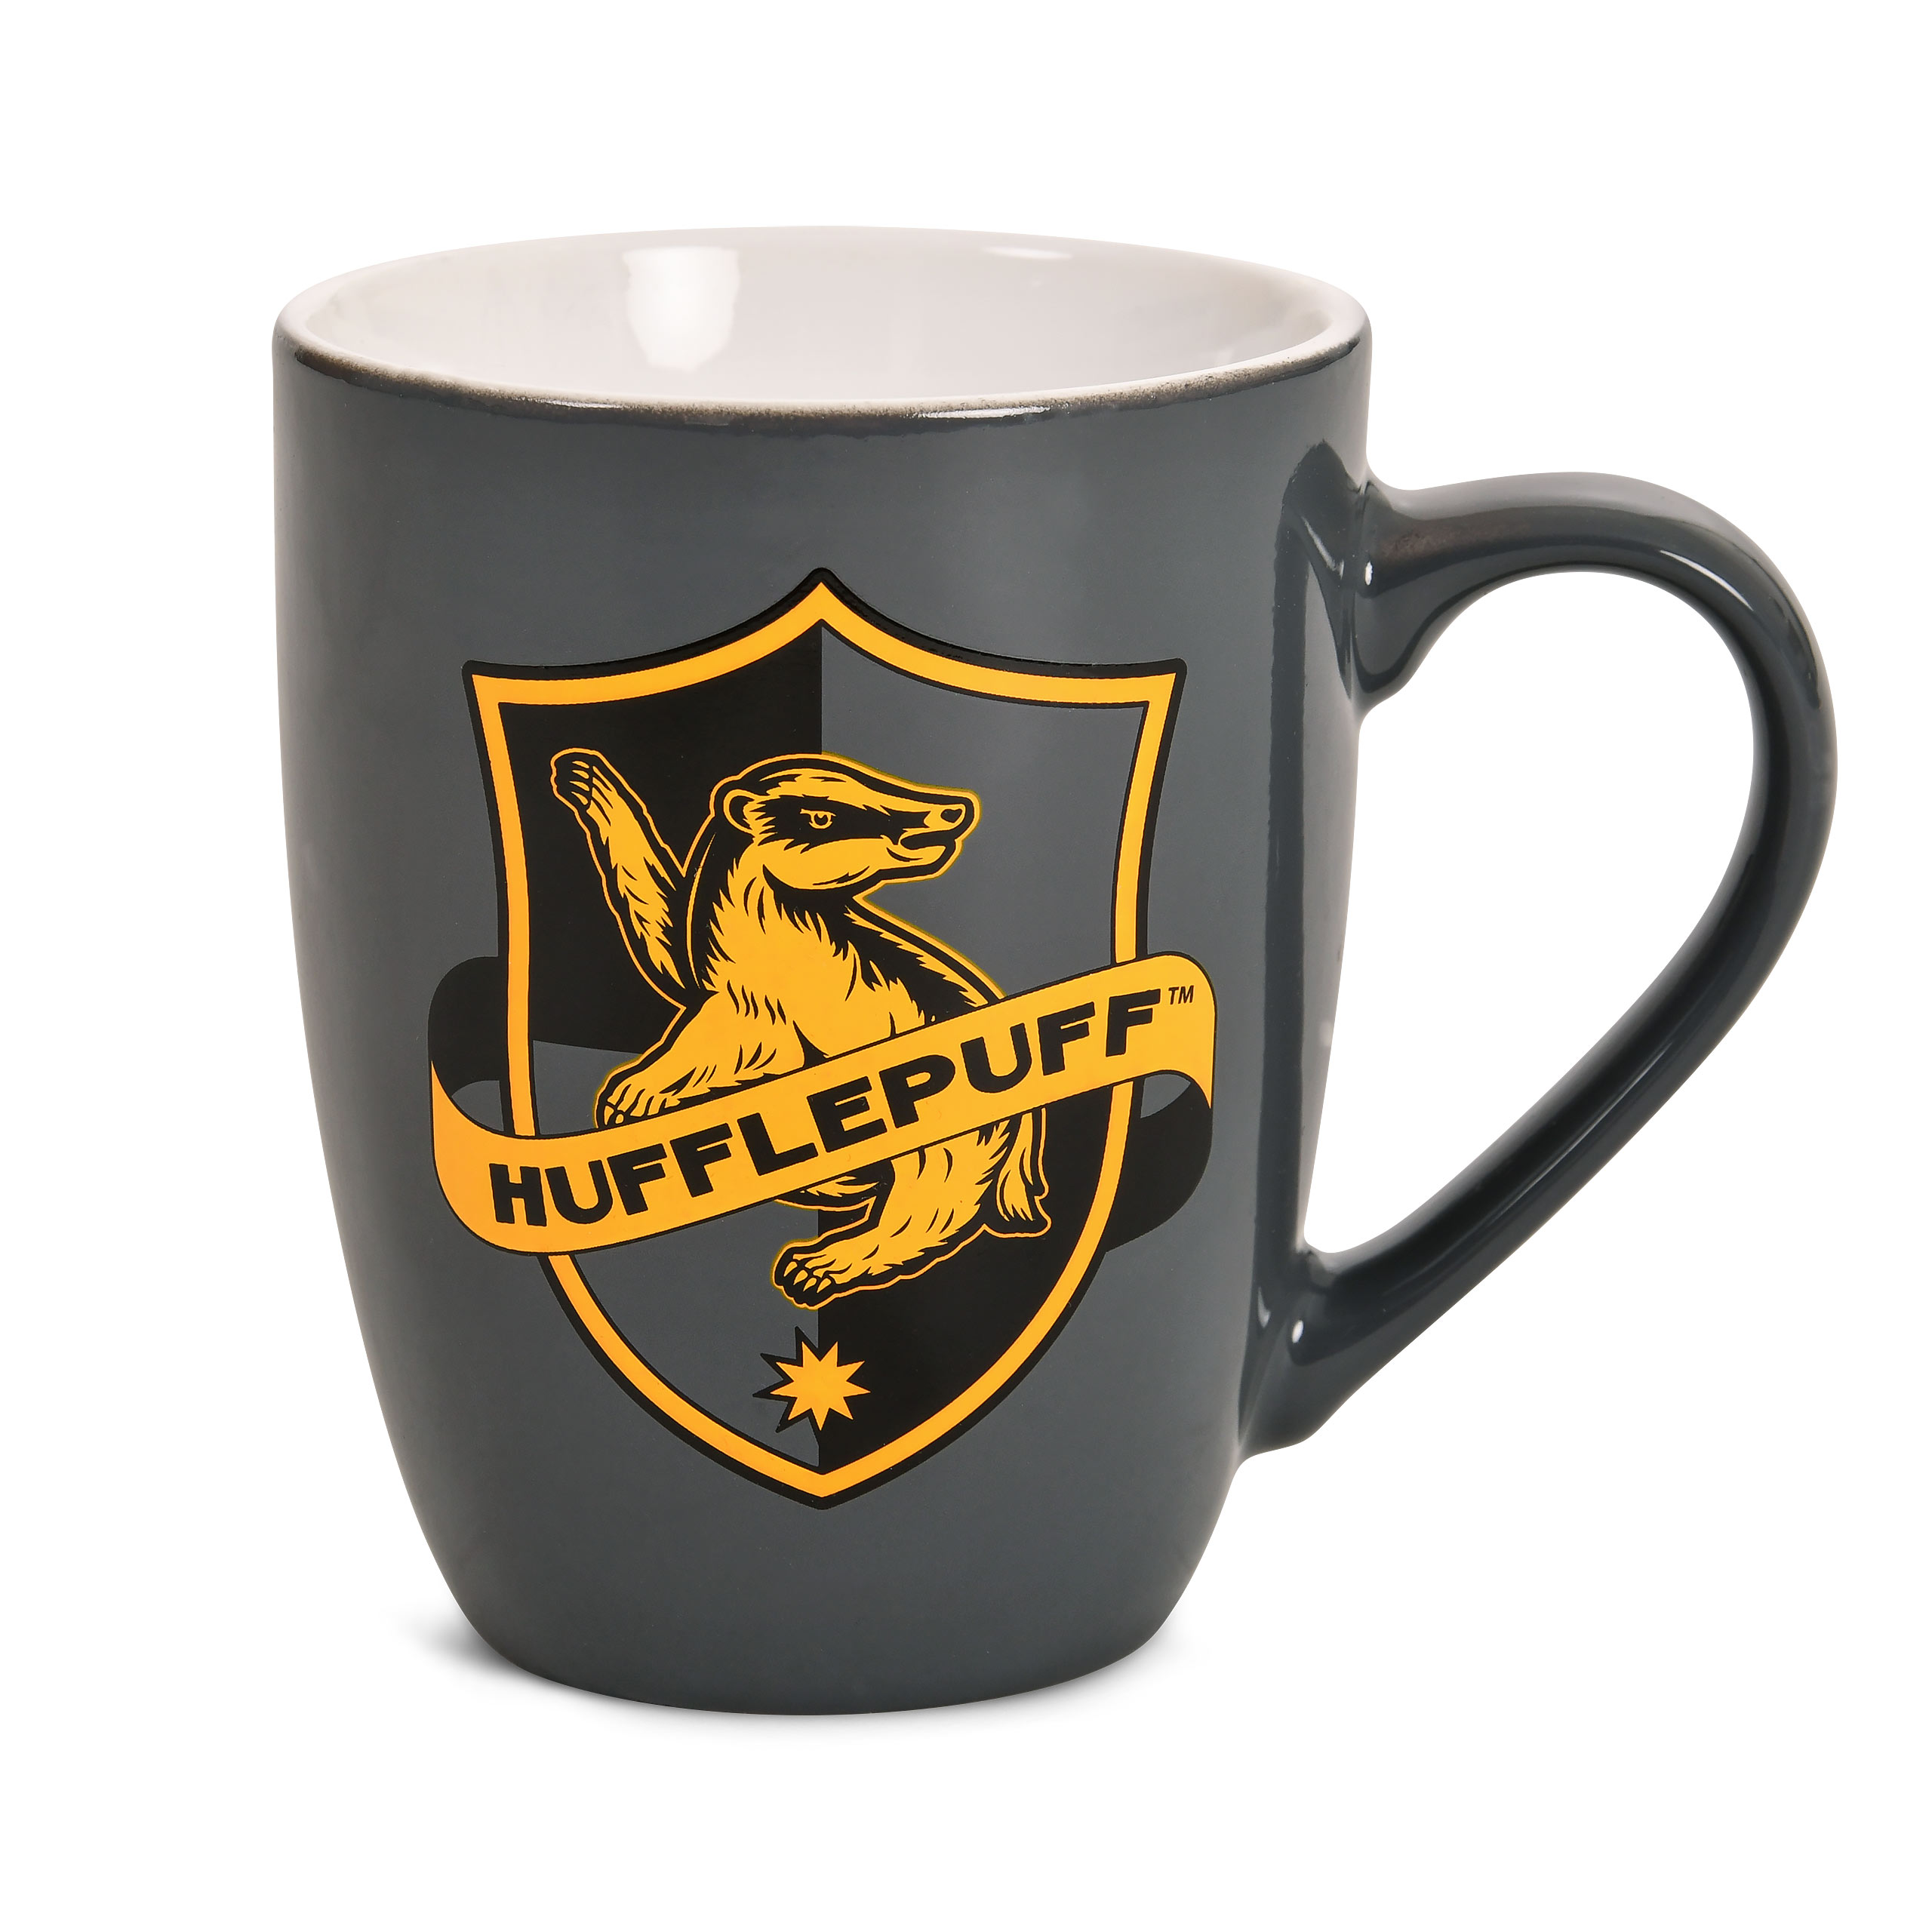 Hufflepuff Logo Tasse grau - Harry Potter